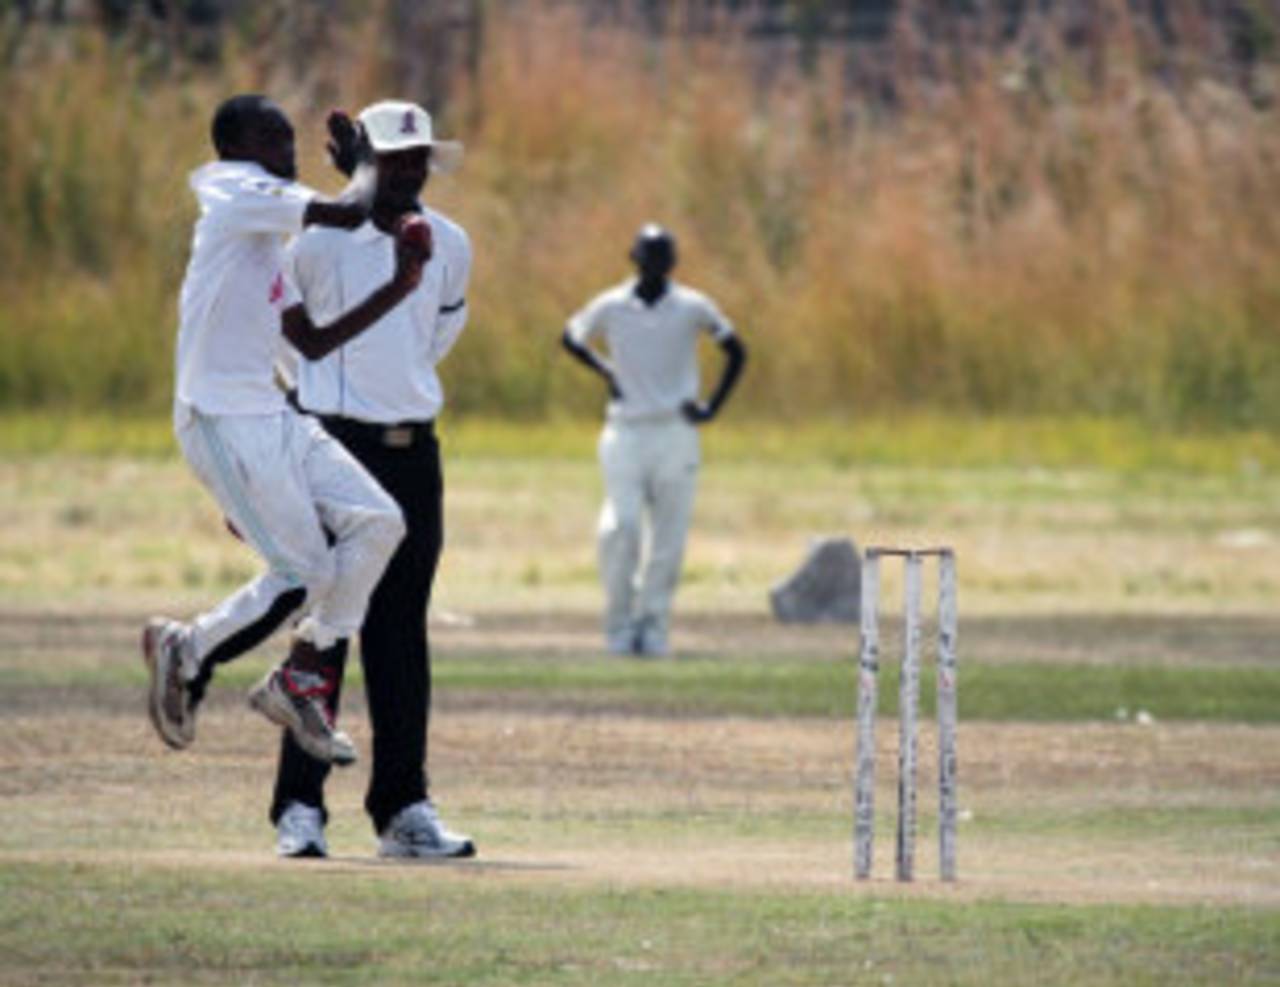 A young bowler at Highfields: Several national cricketers like Tatenda Taibu, Stuart Matsikenyeri and Vusi Sibanda have benefitted from playing for Takashinga&nbsp;&nbsp;&bull;&nbsp;&nbsp;Lauren Edwards